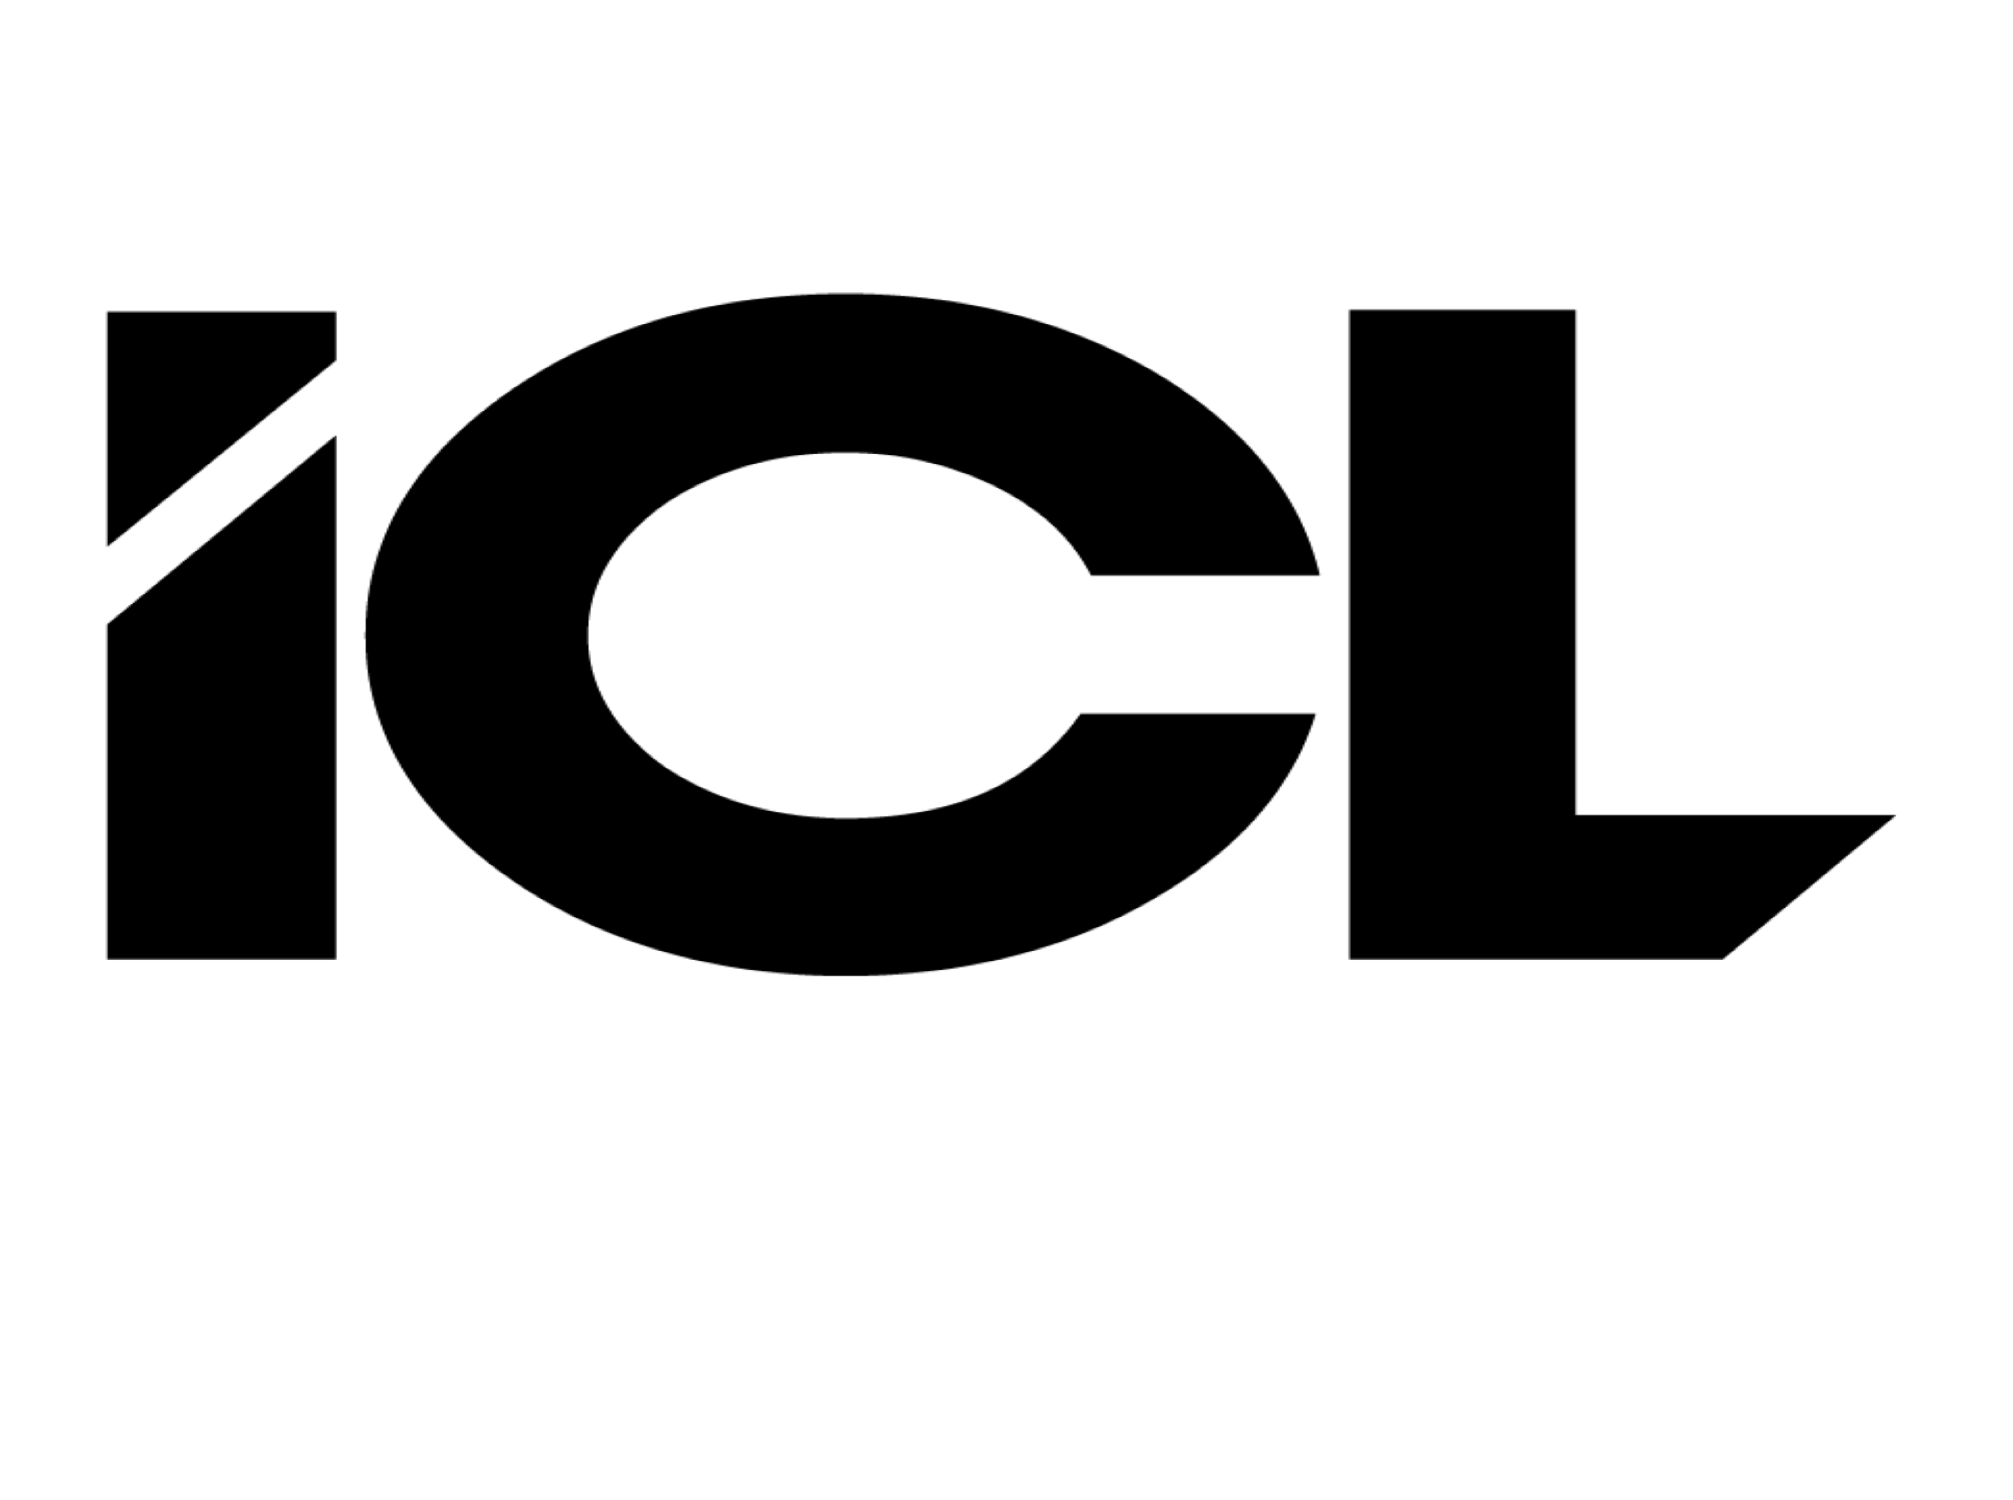 ICL Black logo